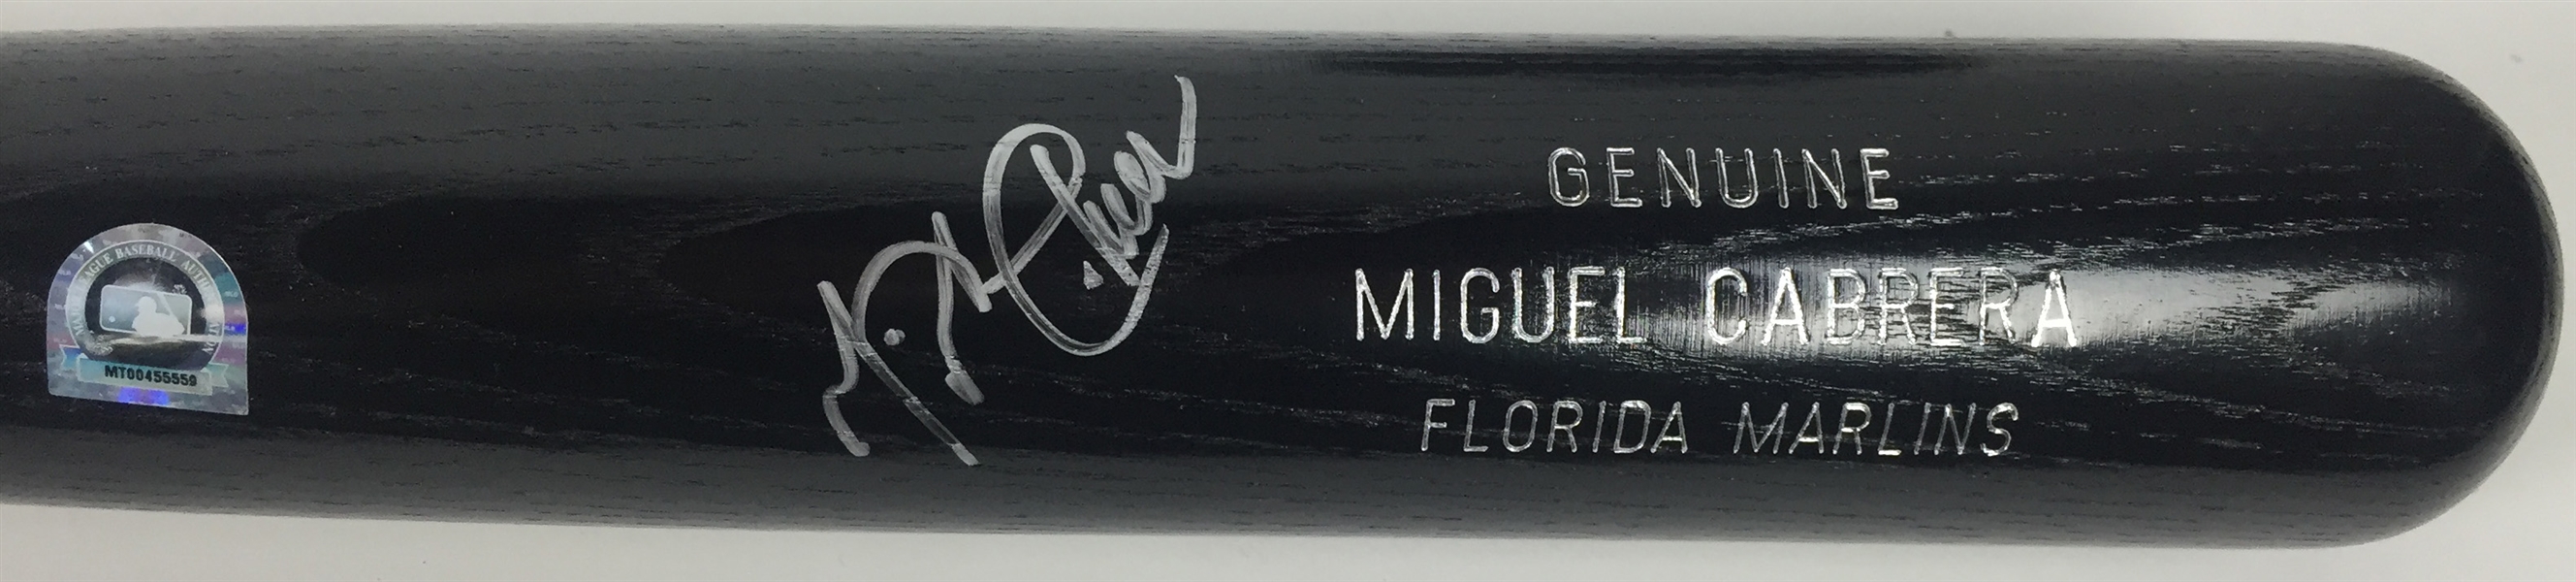 Miguel Cabrera Signed Personal Model Baseball Bat (MLB Authentication)